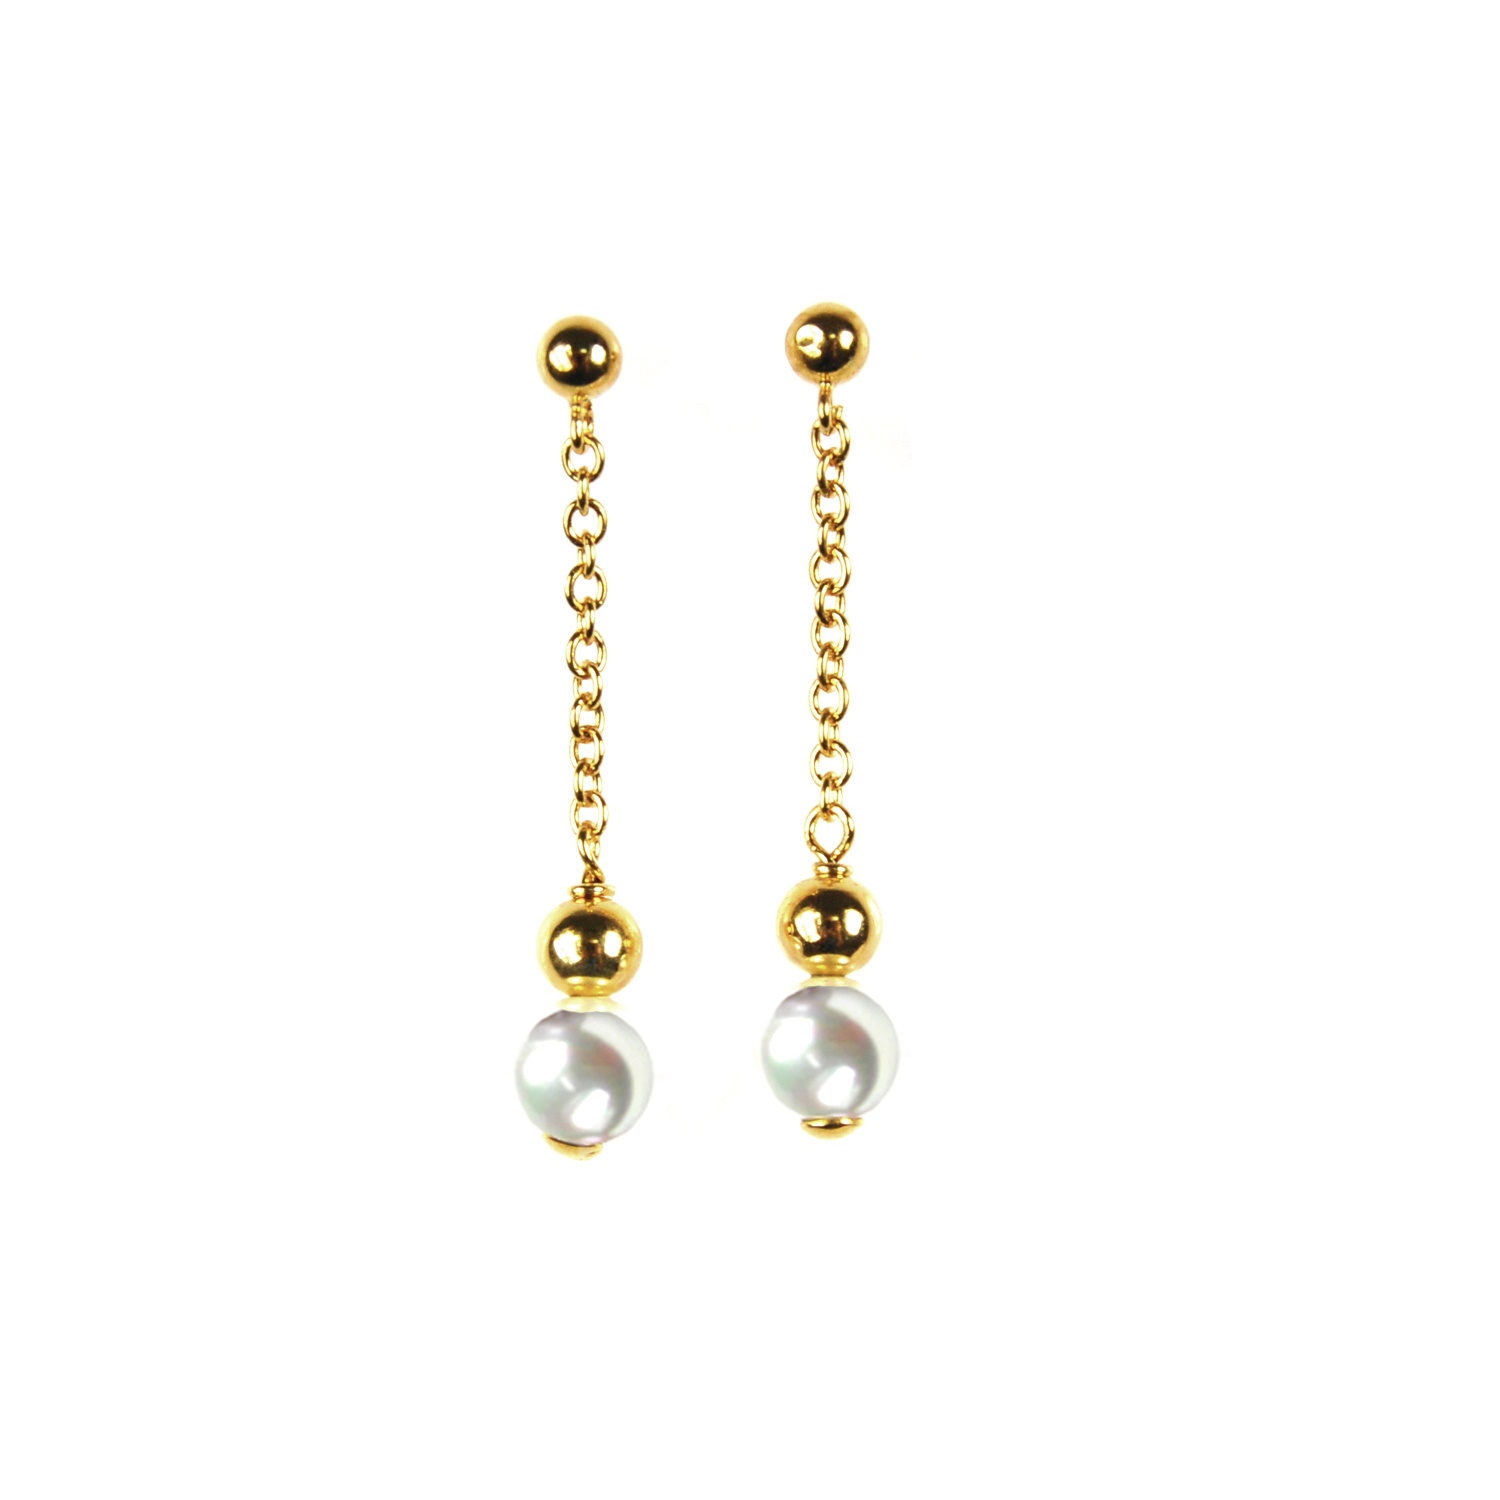 Goldplated earrings - 2 in 1 1